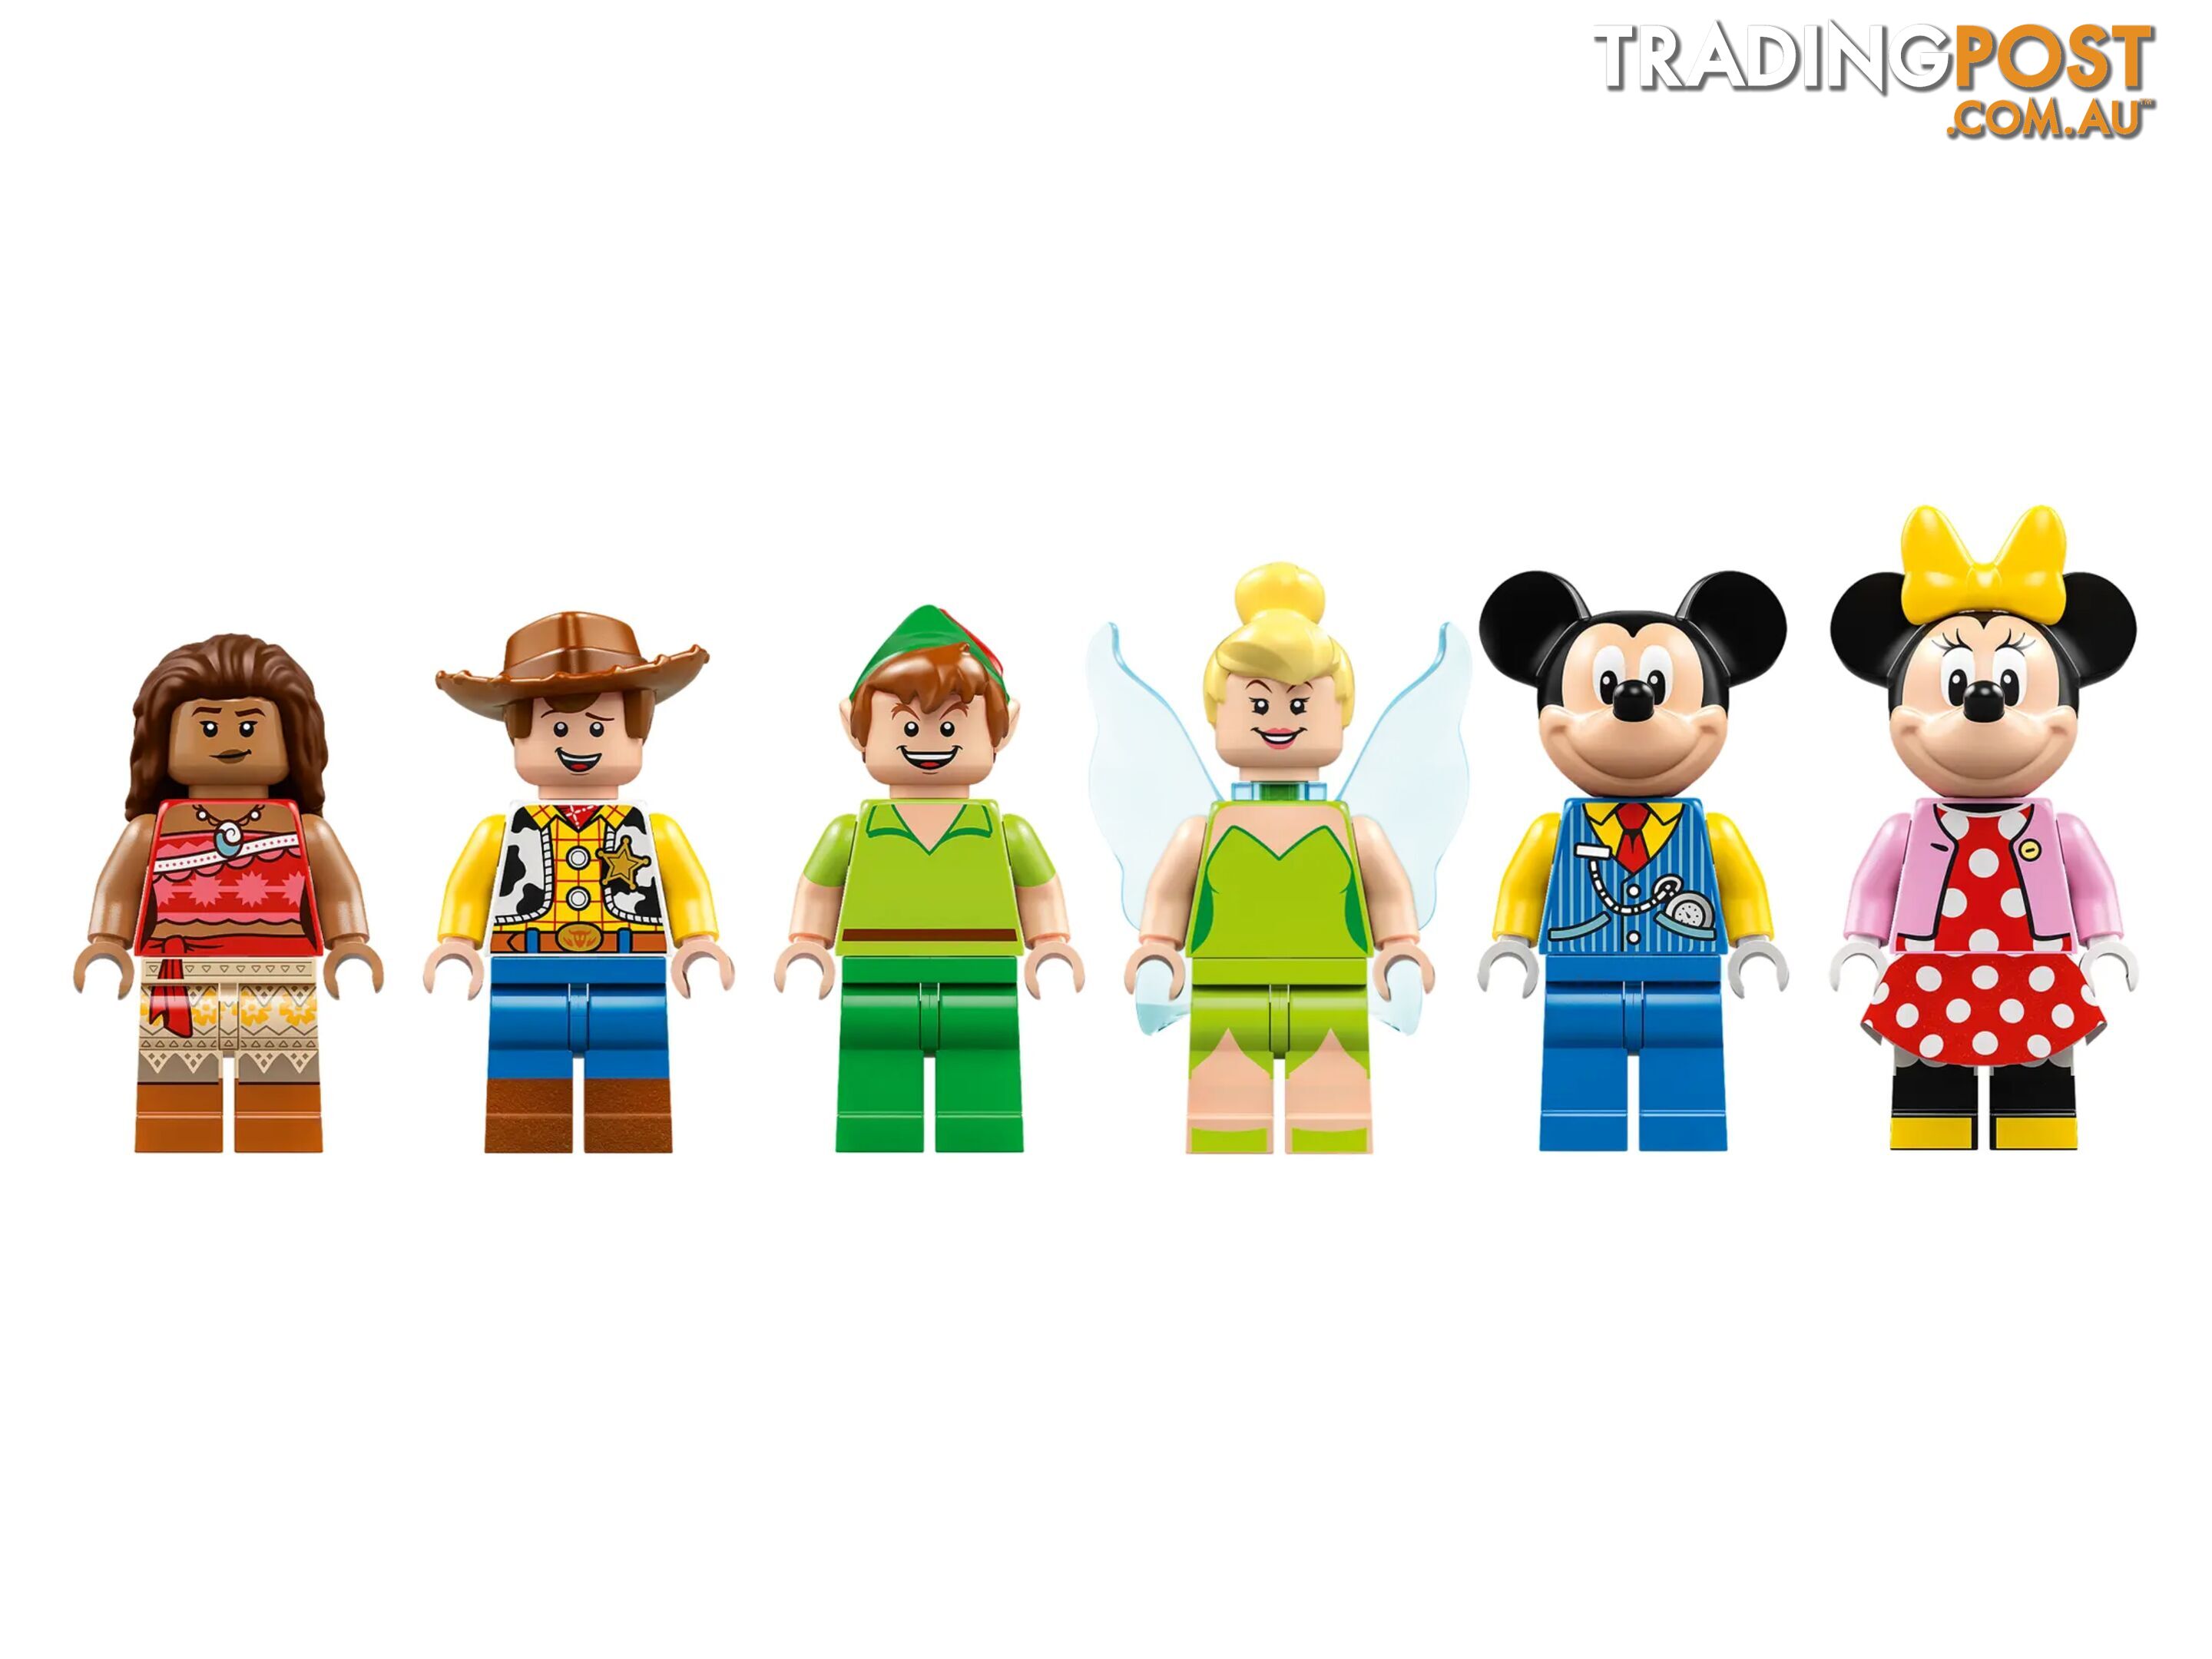 LEGO 43212 Disney Celebration Trainâ€‹ - Disney 4+ - 5702017424798